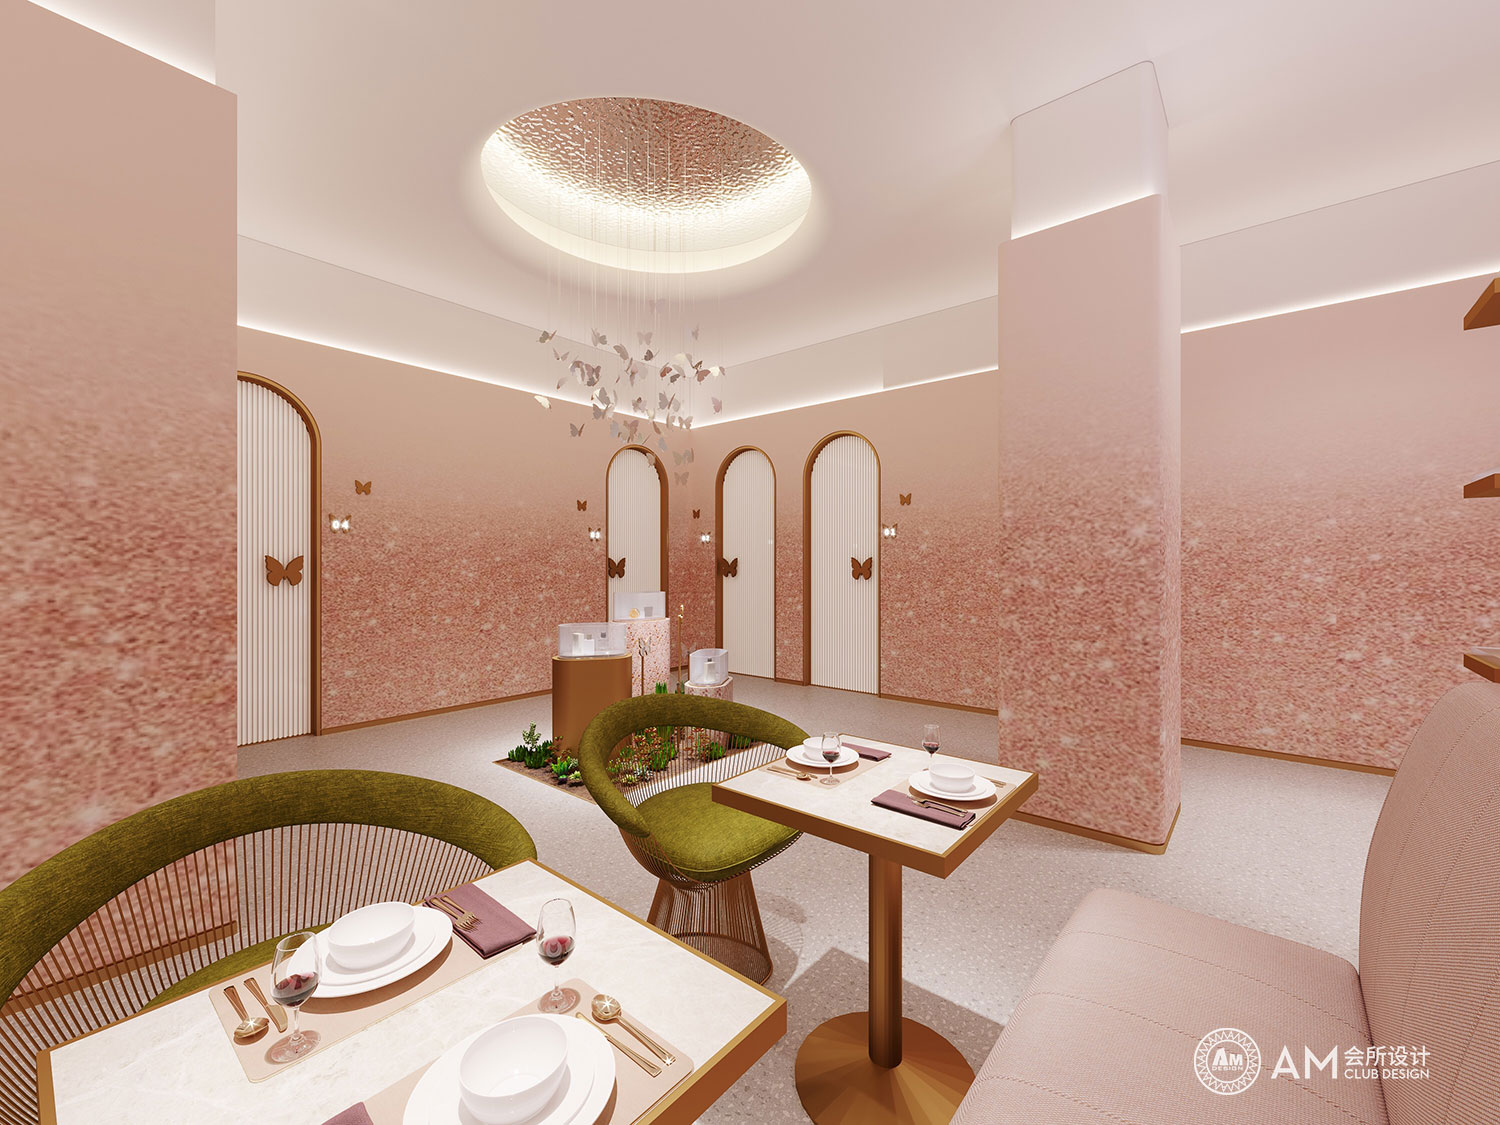 AM DESIGN | Dining area design of Andison Beauty Salon